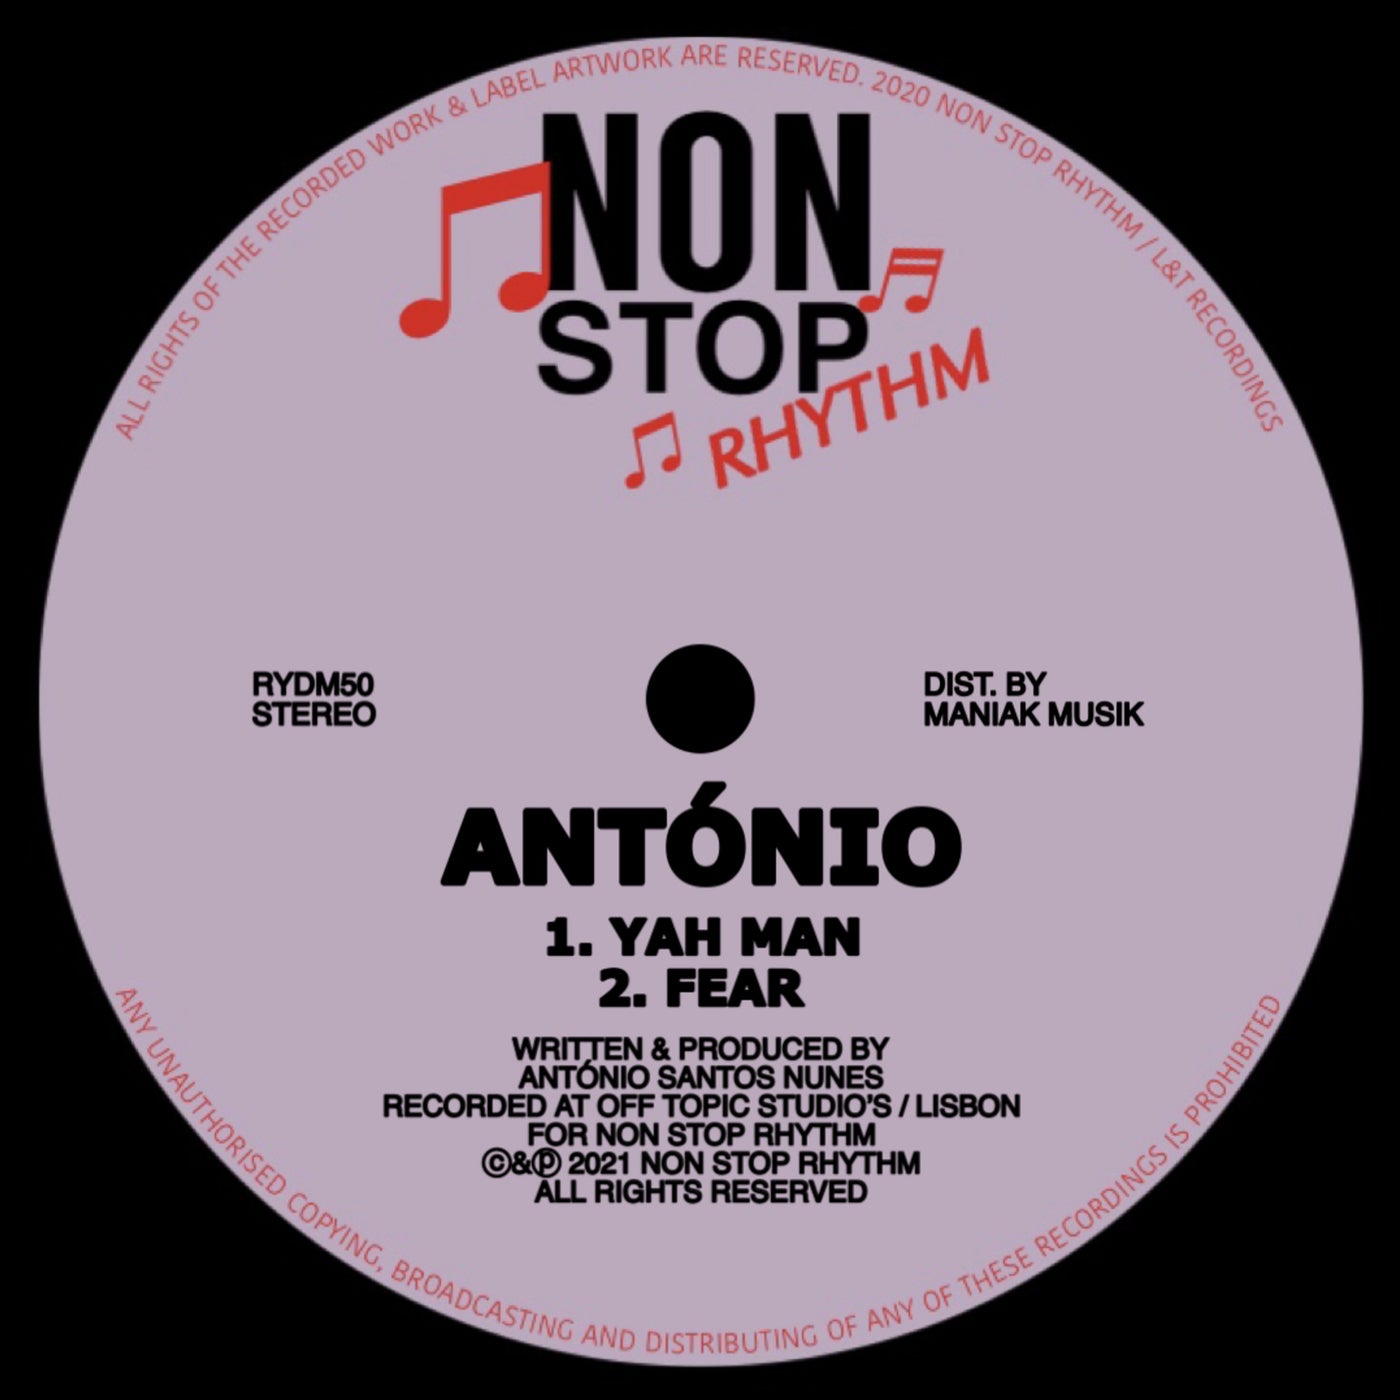 Antonio - Yah Man [RYDM50]